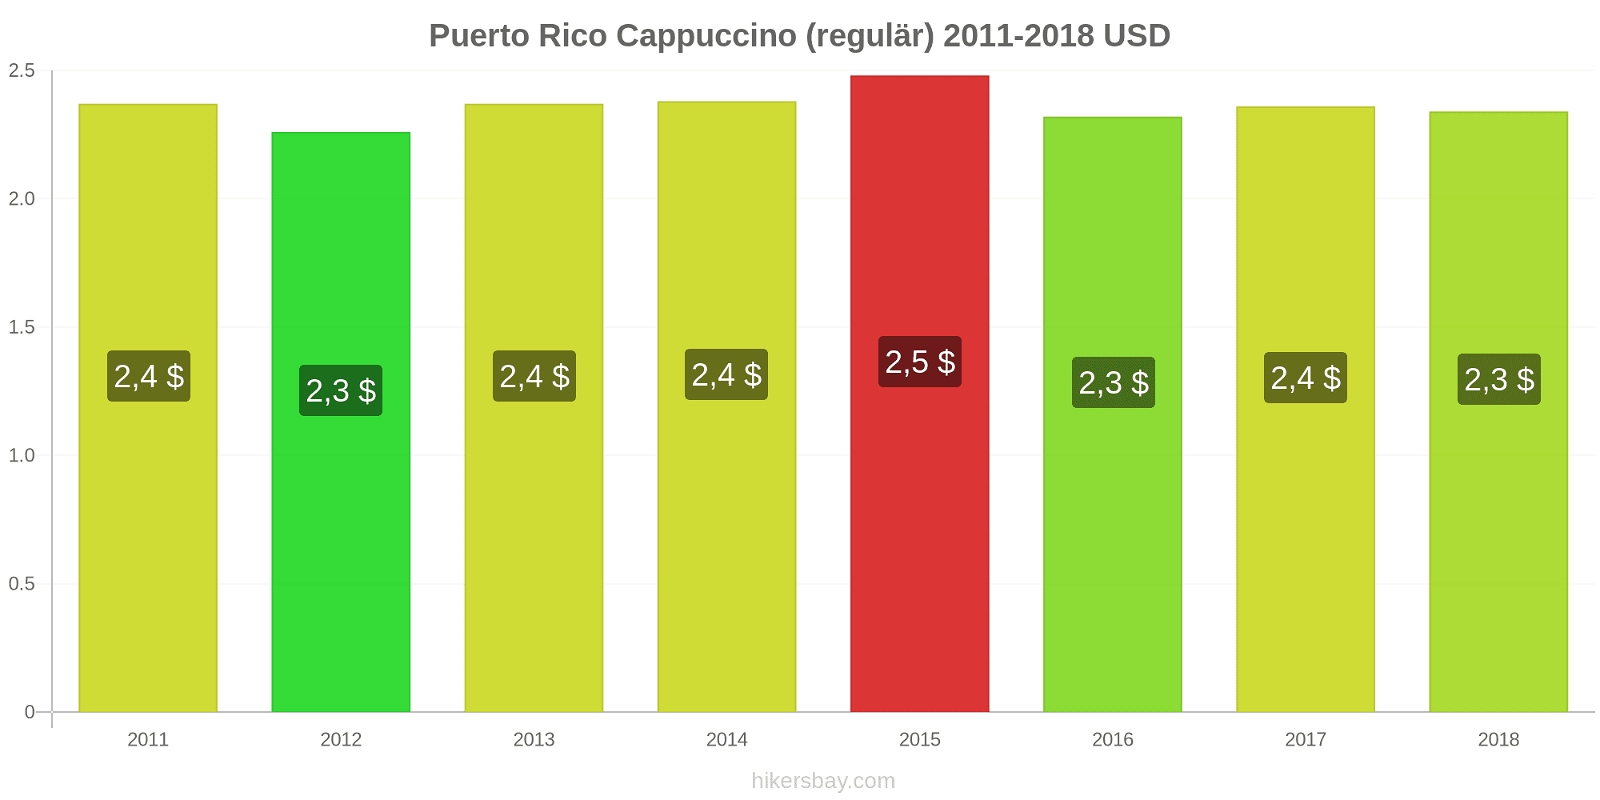 Puerto Rico Preisänderungen Cappuccino (regulär) hikersbay.com